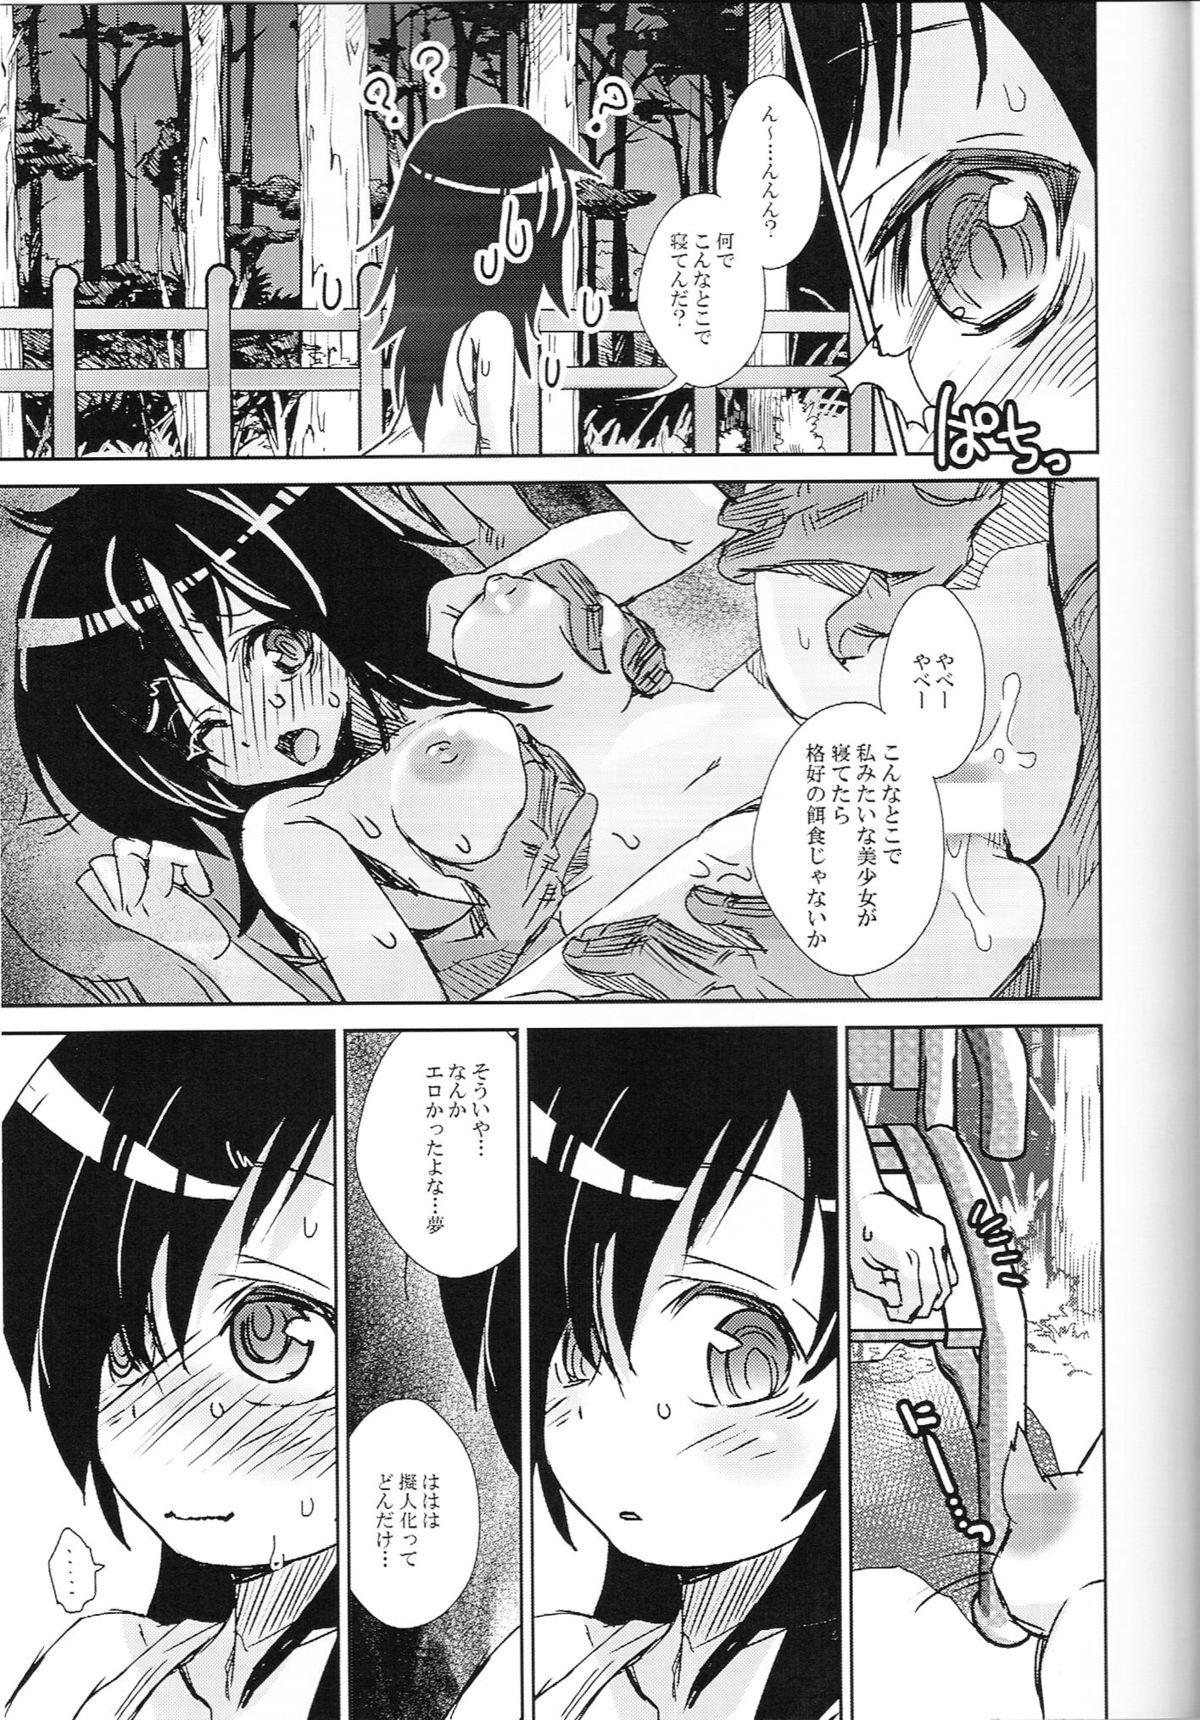 Toilet Watashi ga Moteru noha Neko ni dake! - Its not my fault that im not popular Wet - Page 12